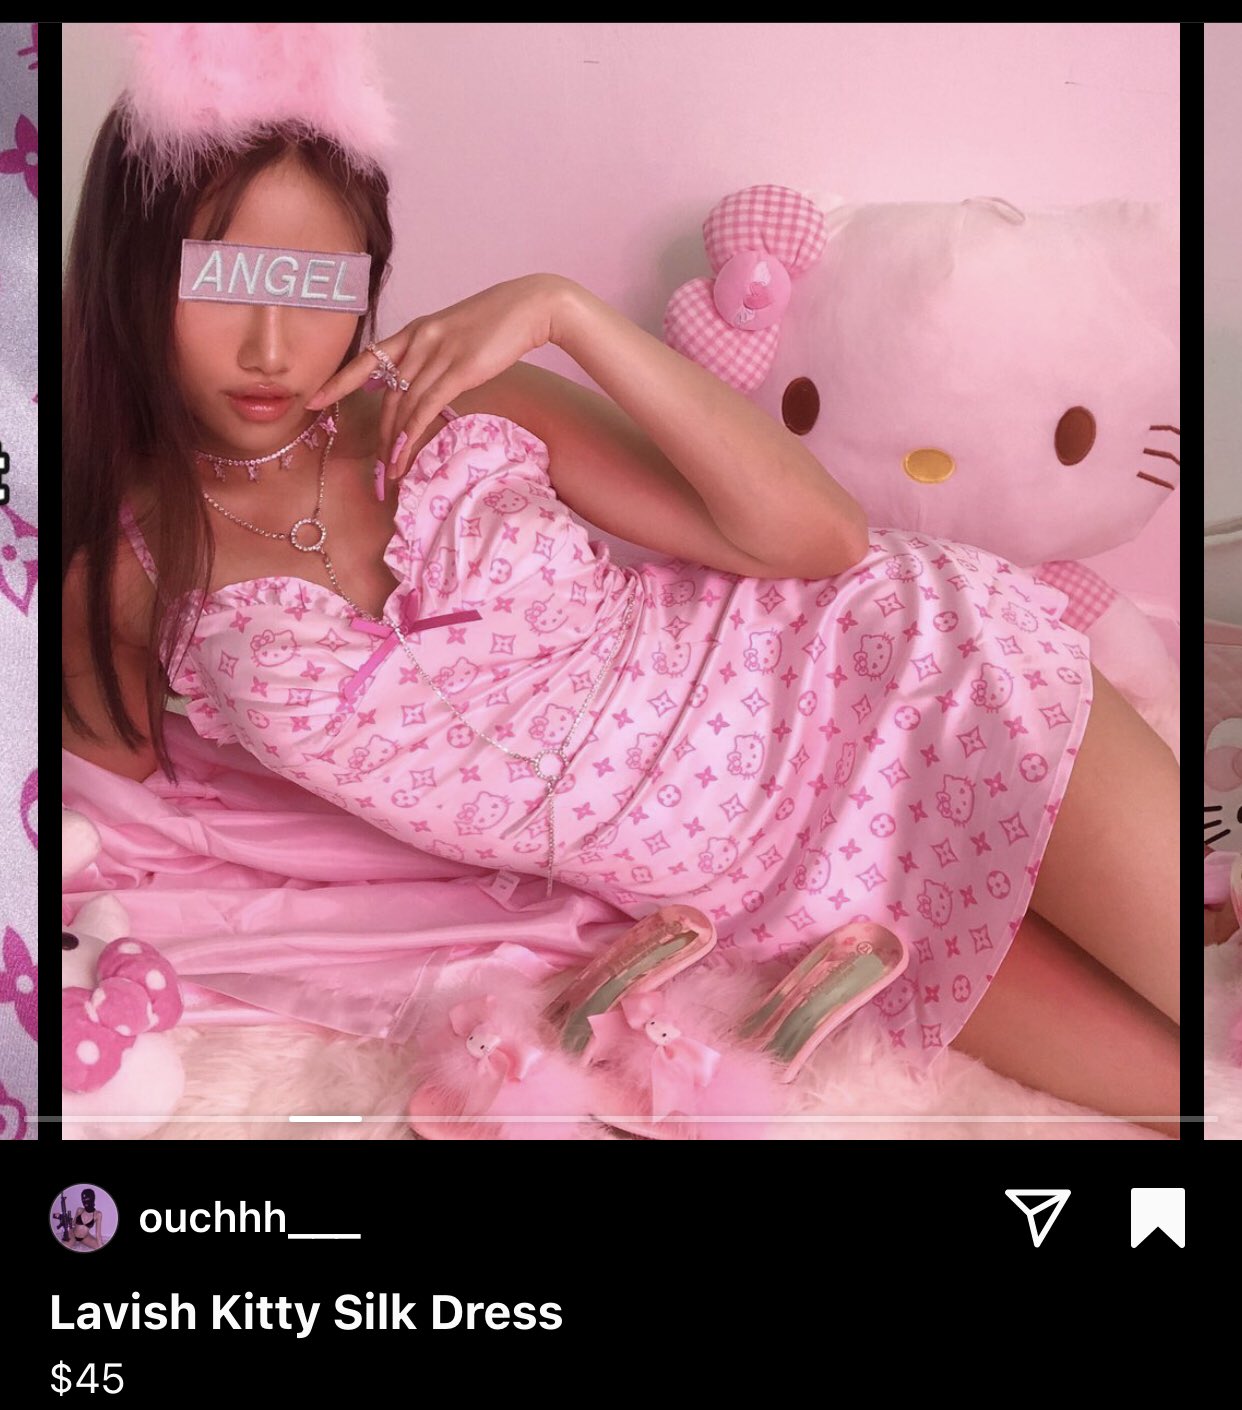 Lavish Kitty Silk Dress